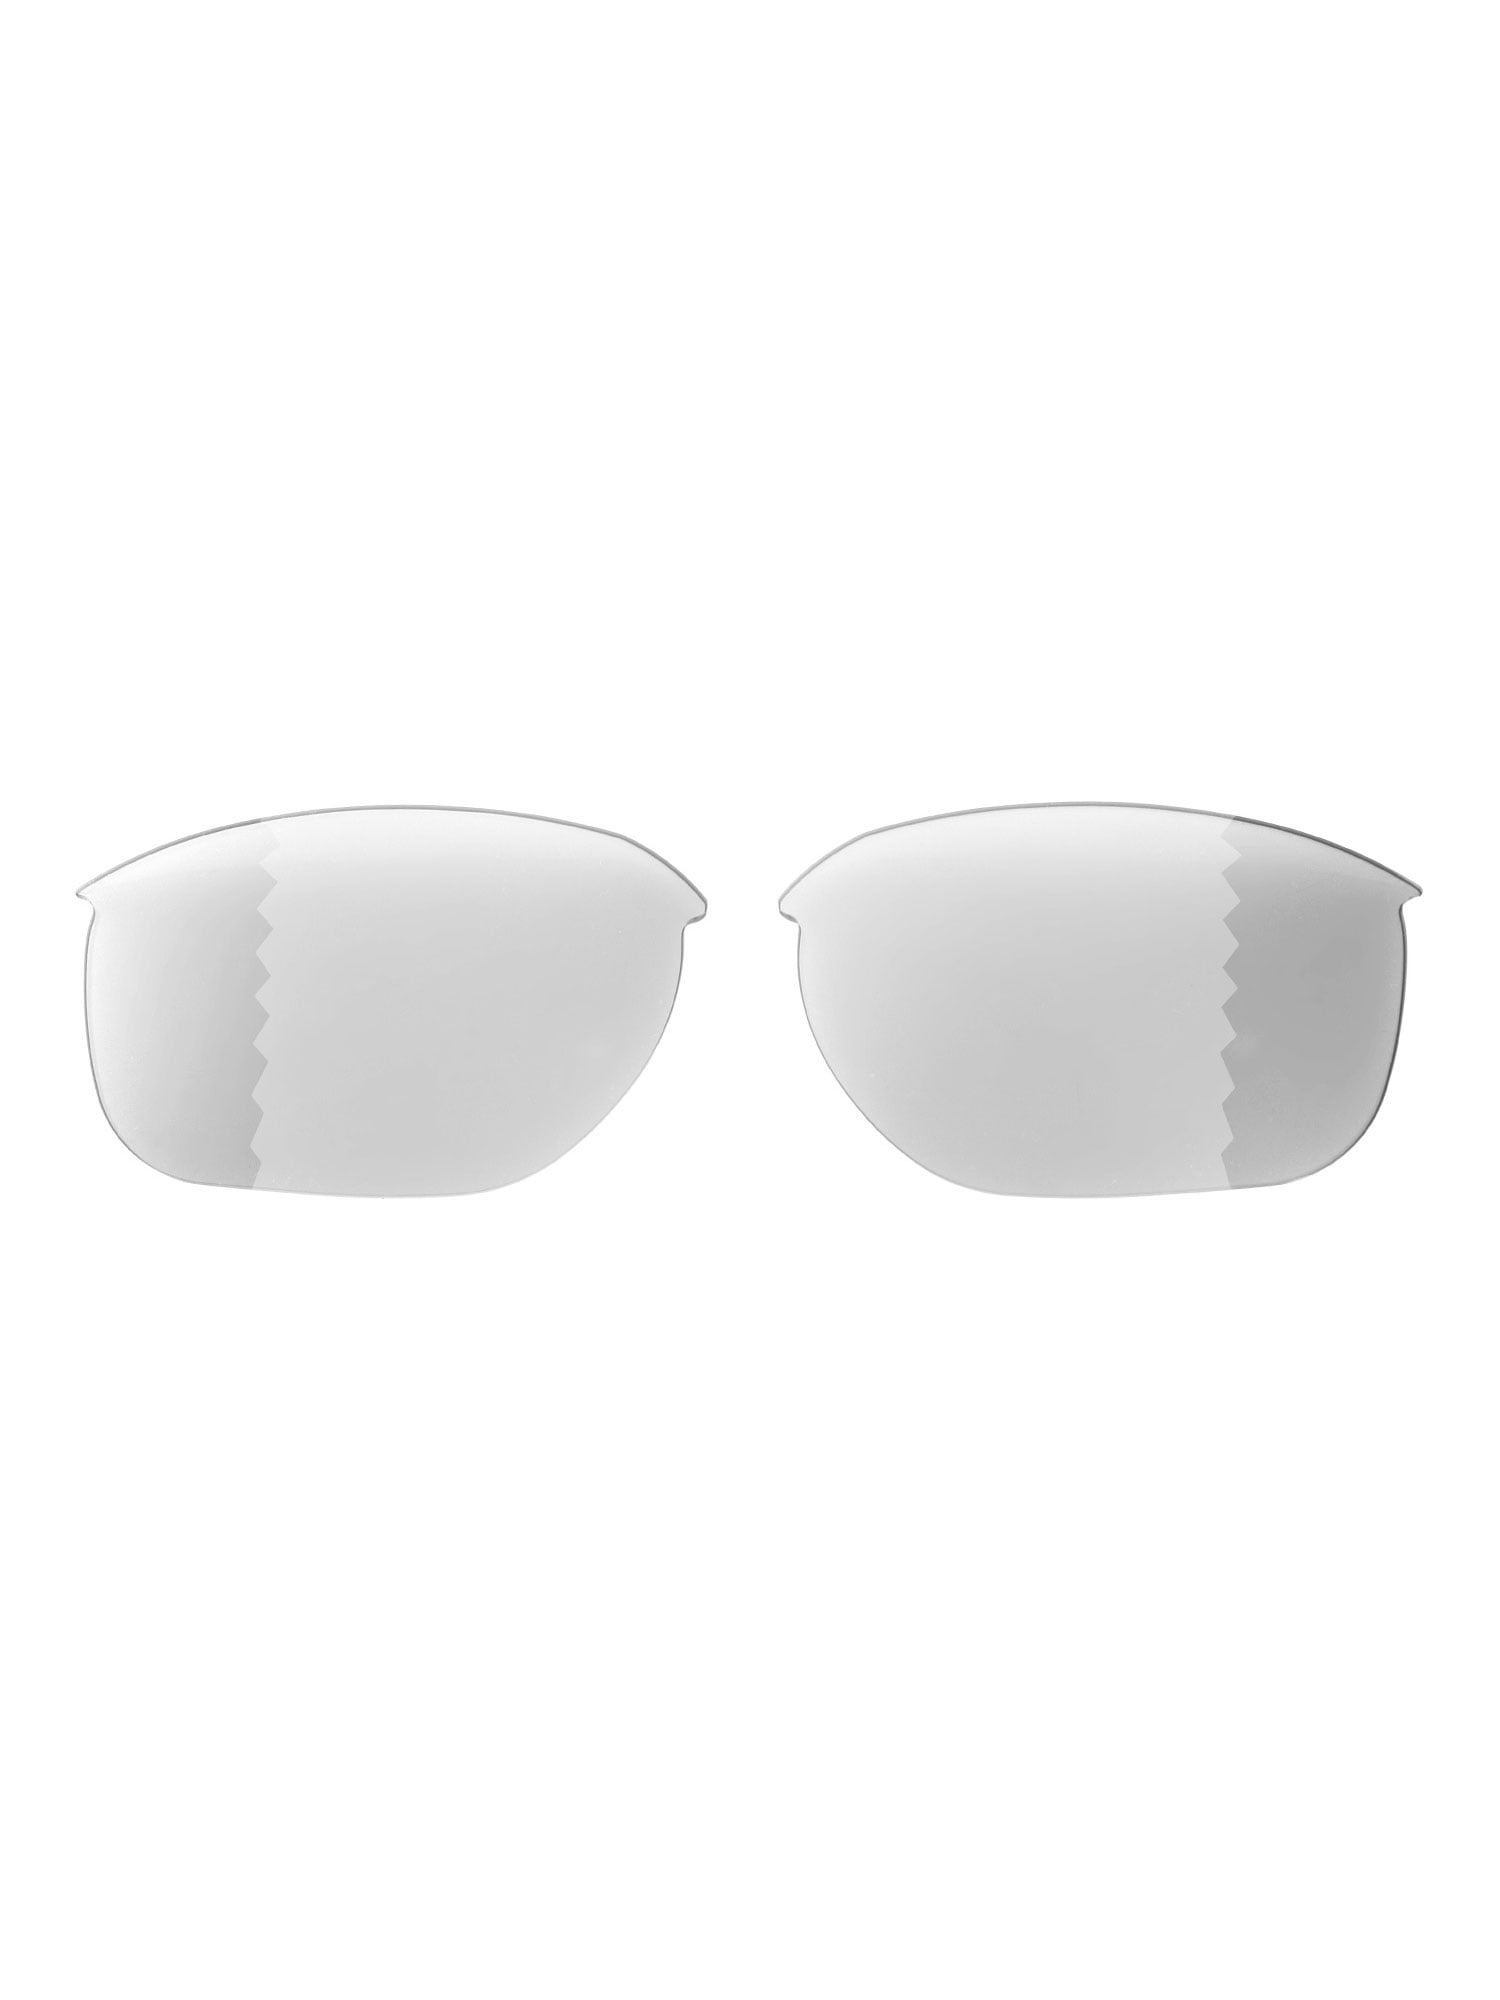 oakley sliver edge replacement lenses